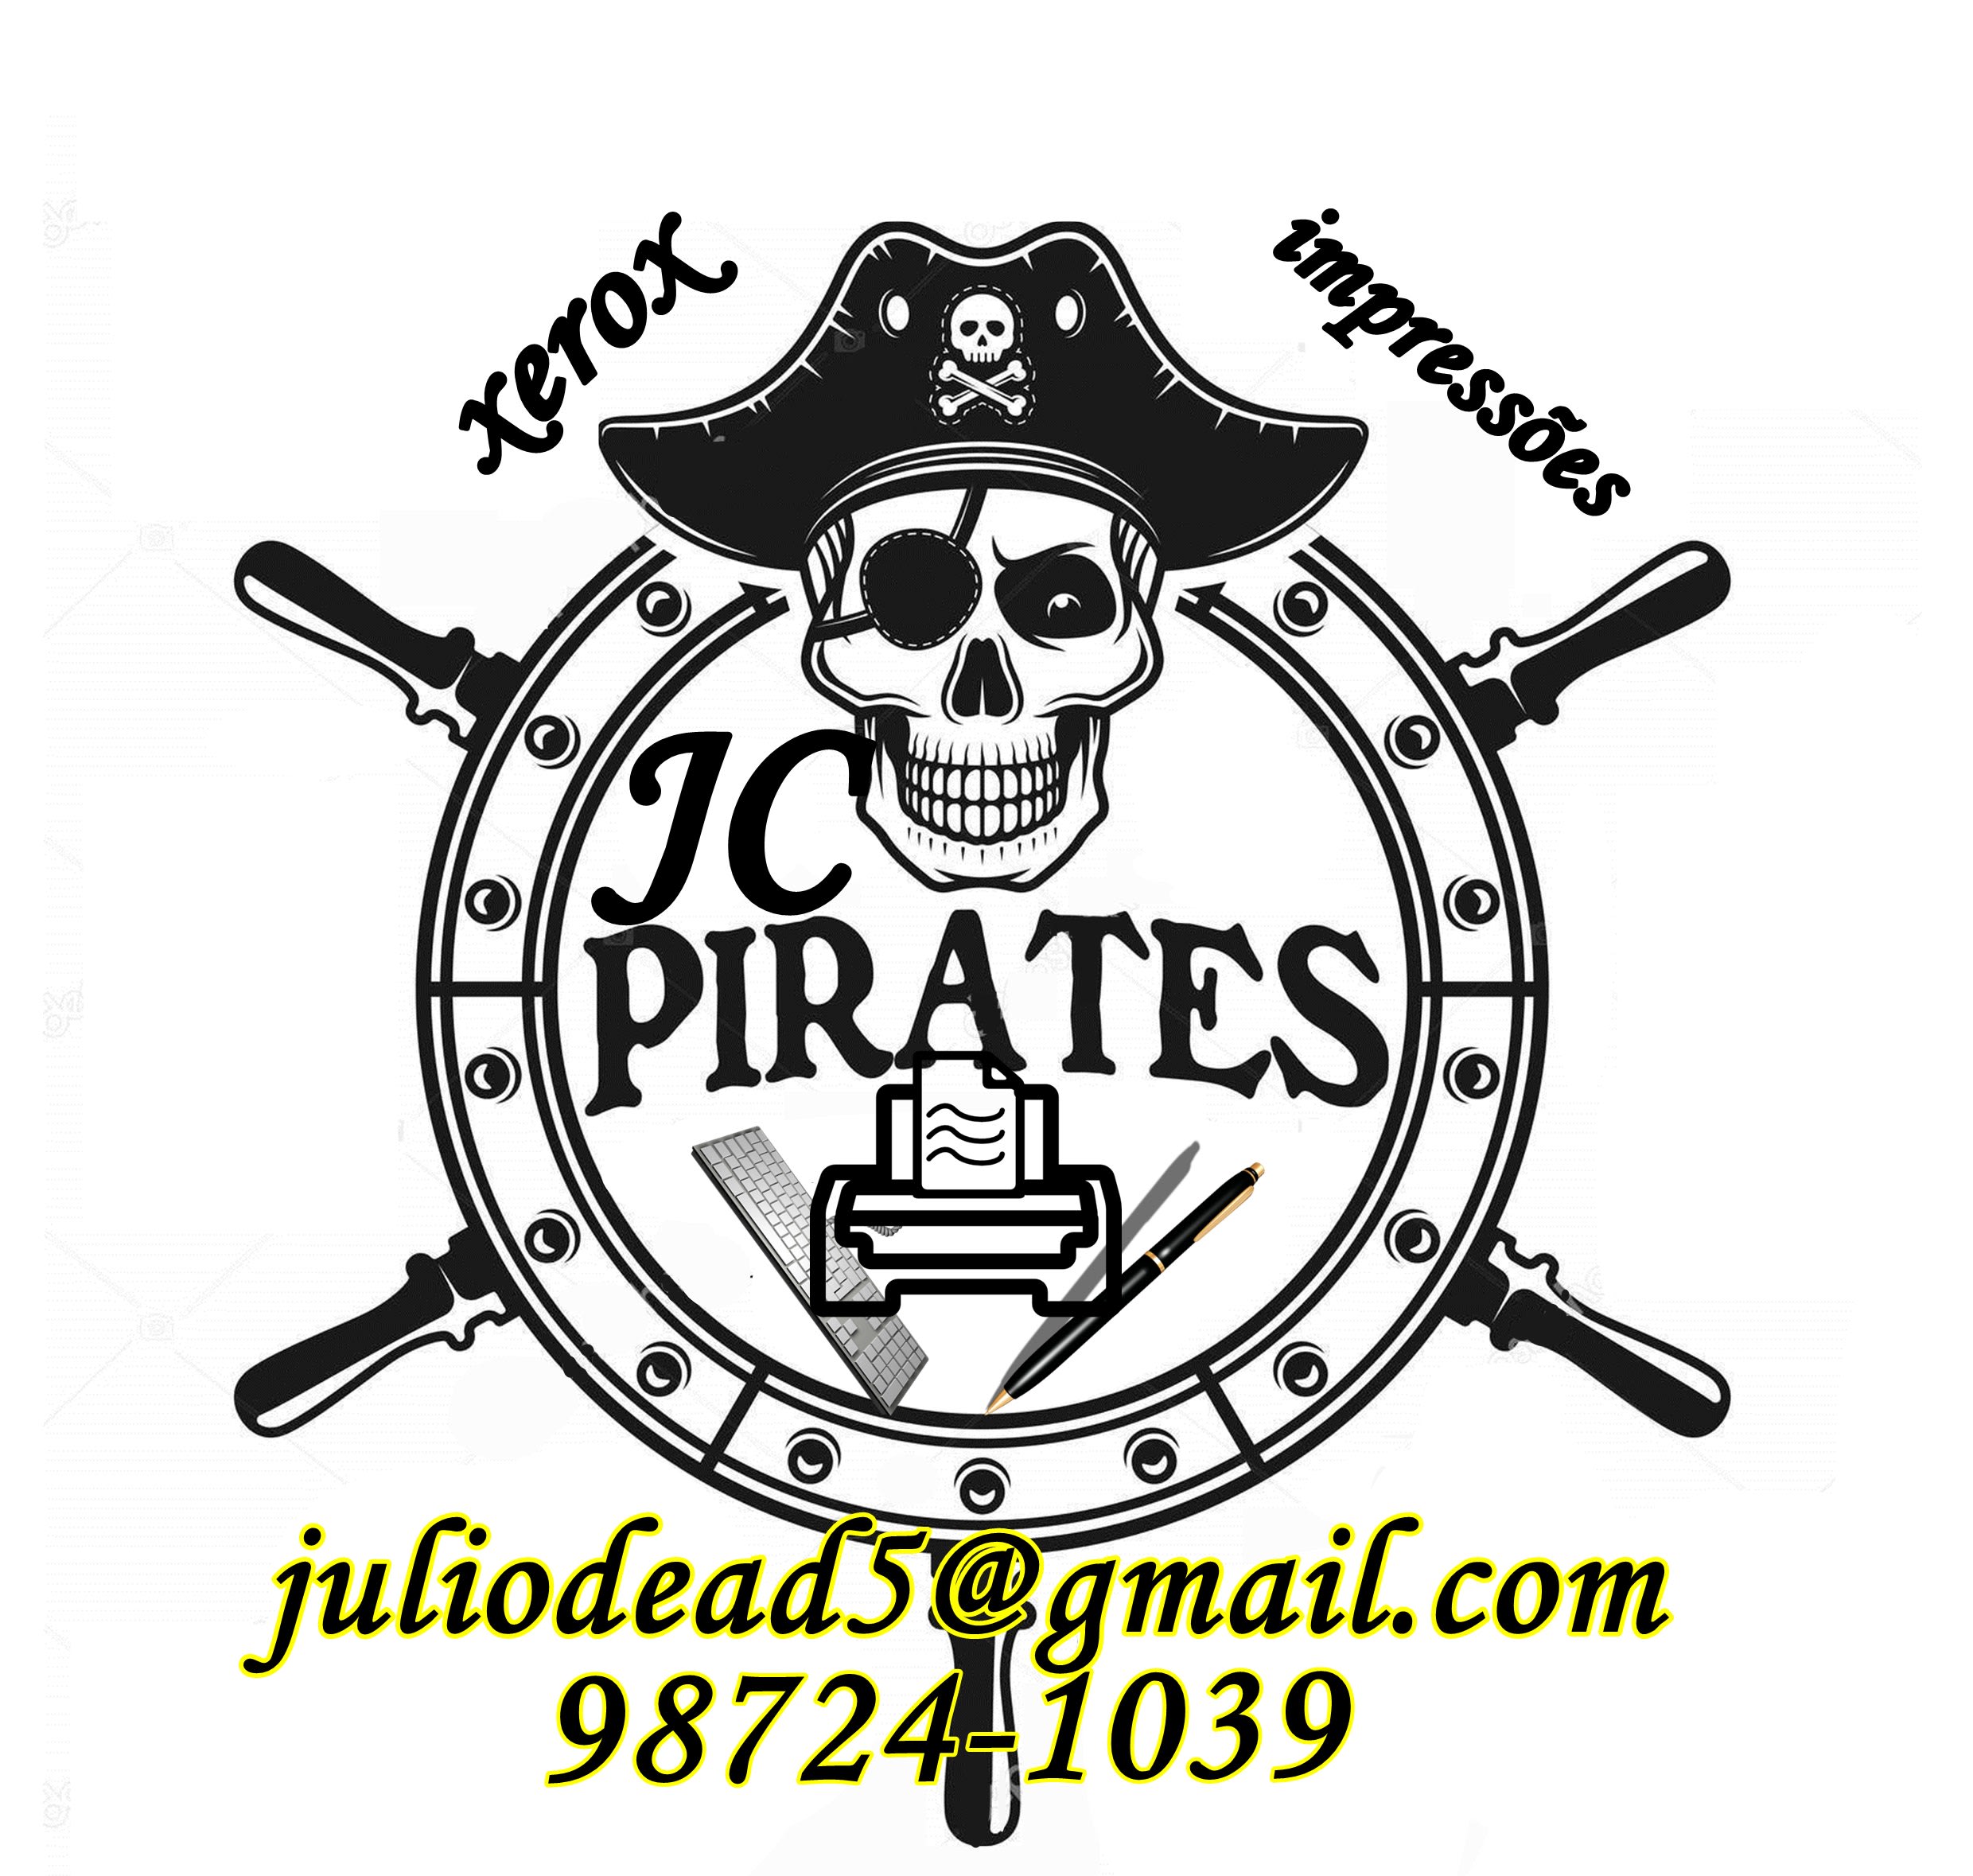 Jc Pirates